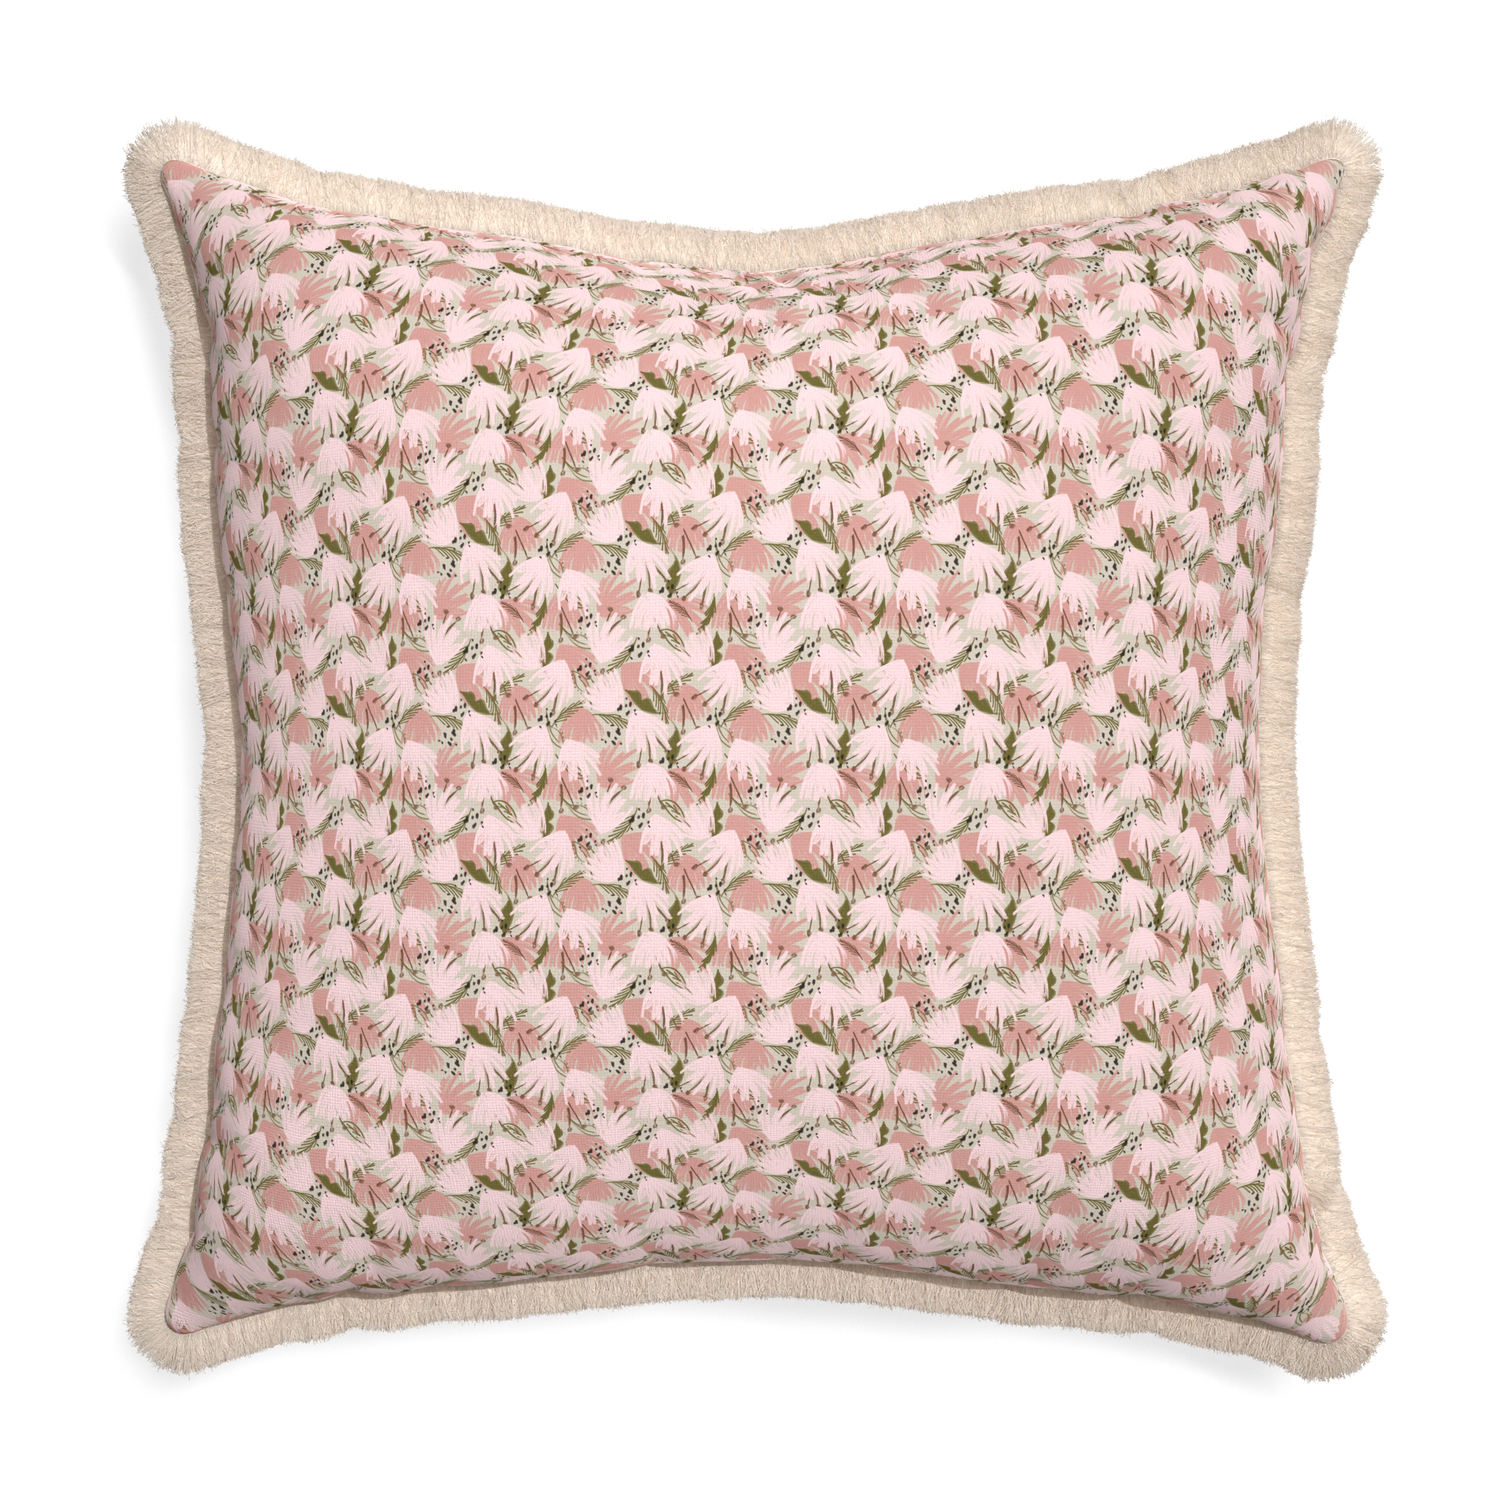 Euro-sham eden pink custom pillow with cream fringe on white background